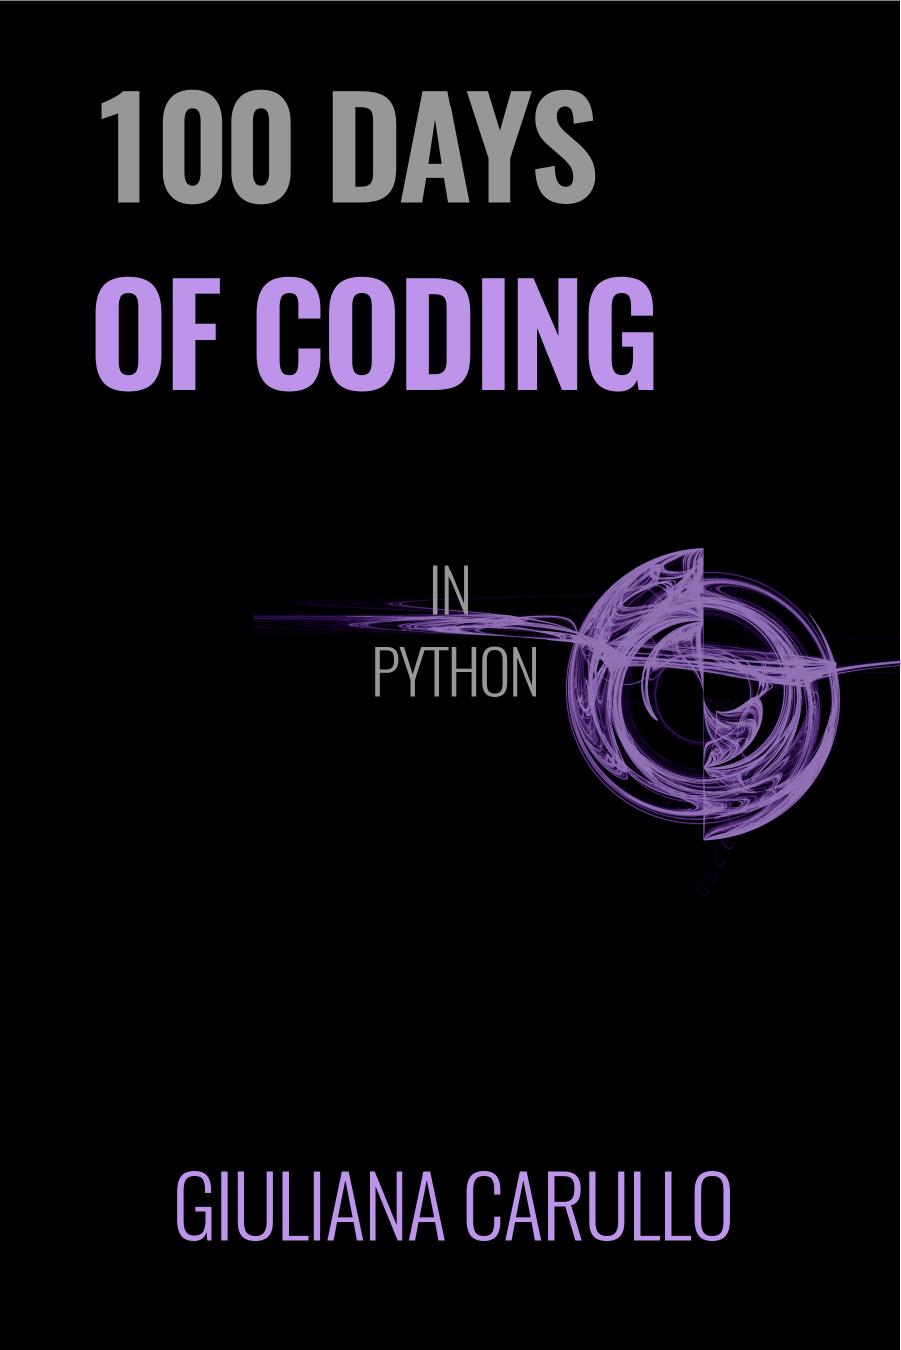 100 Days of Coding in Python by Giuliana Carullo